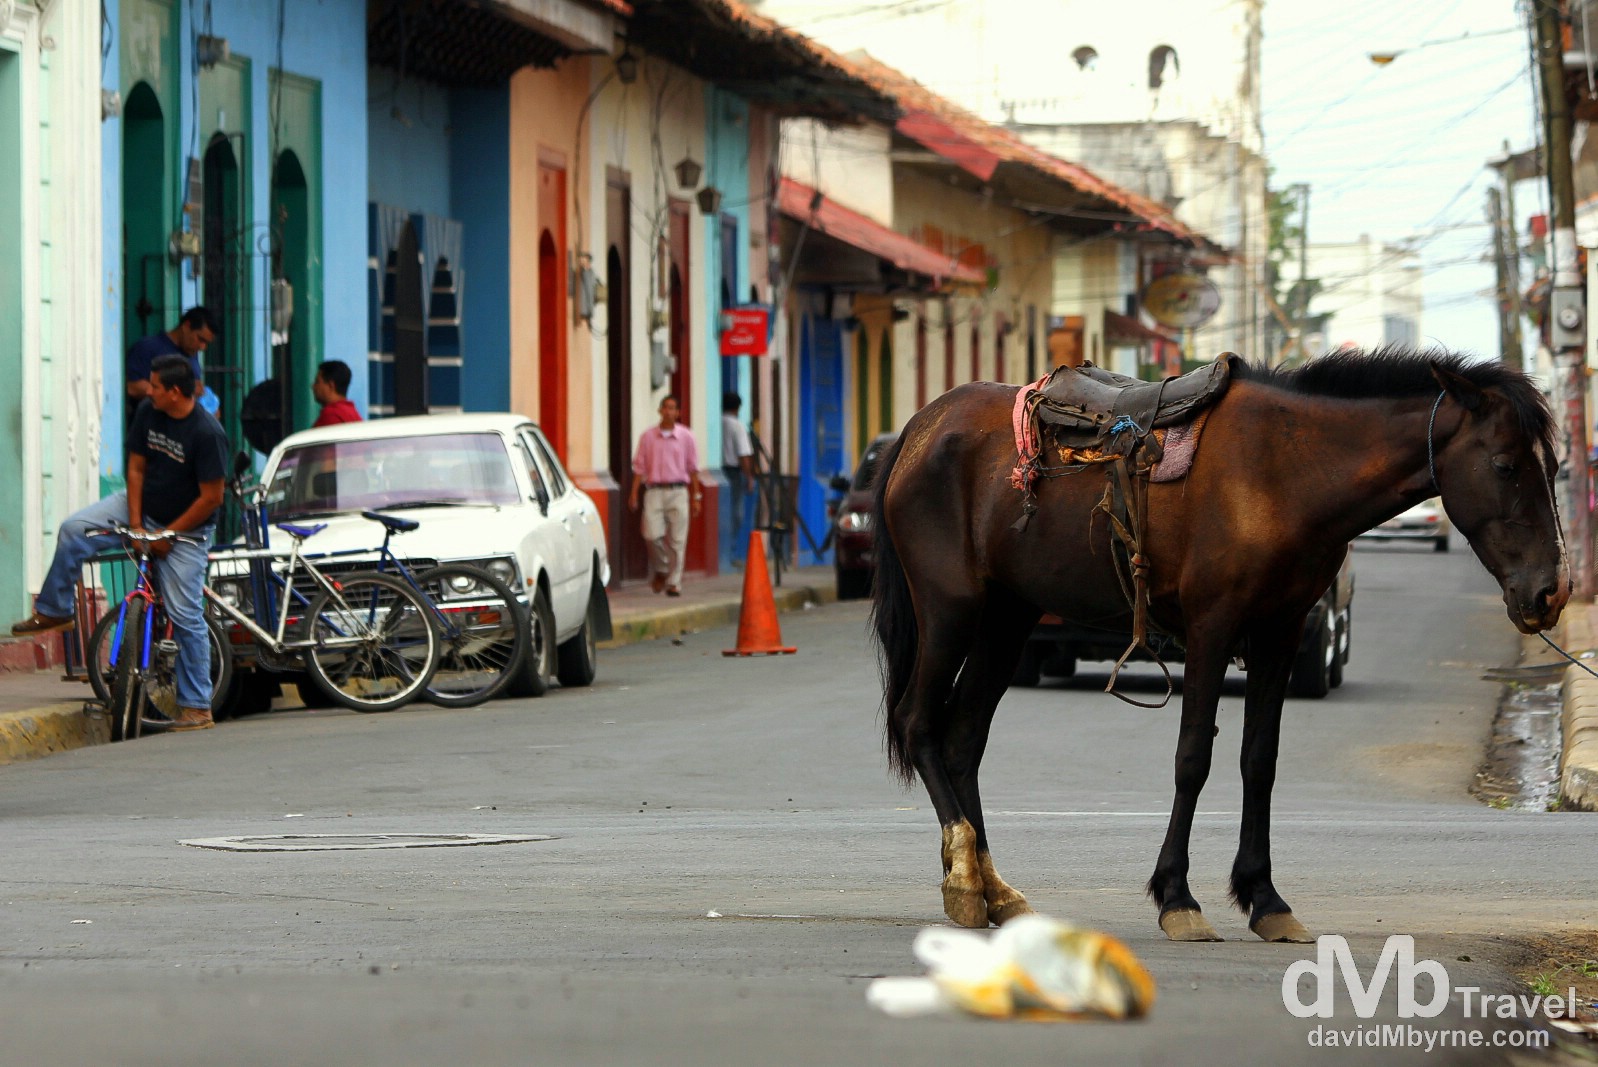 Calle Central Ruben Dario, Leon, Nicaragua. June 15th 2013.